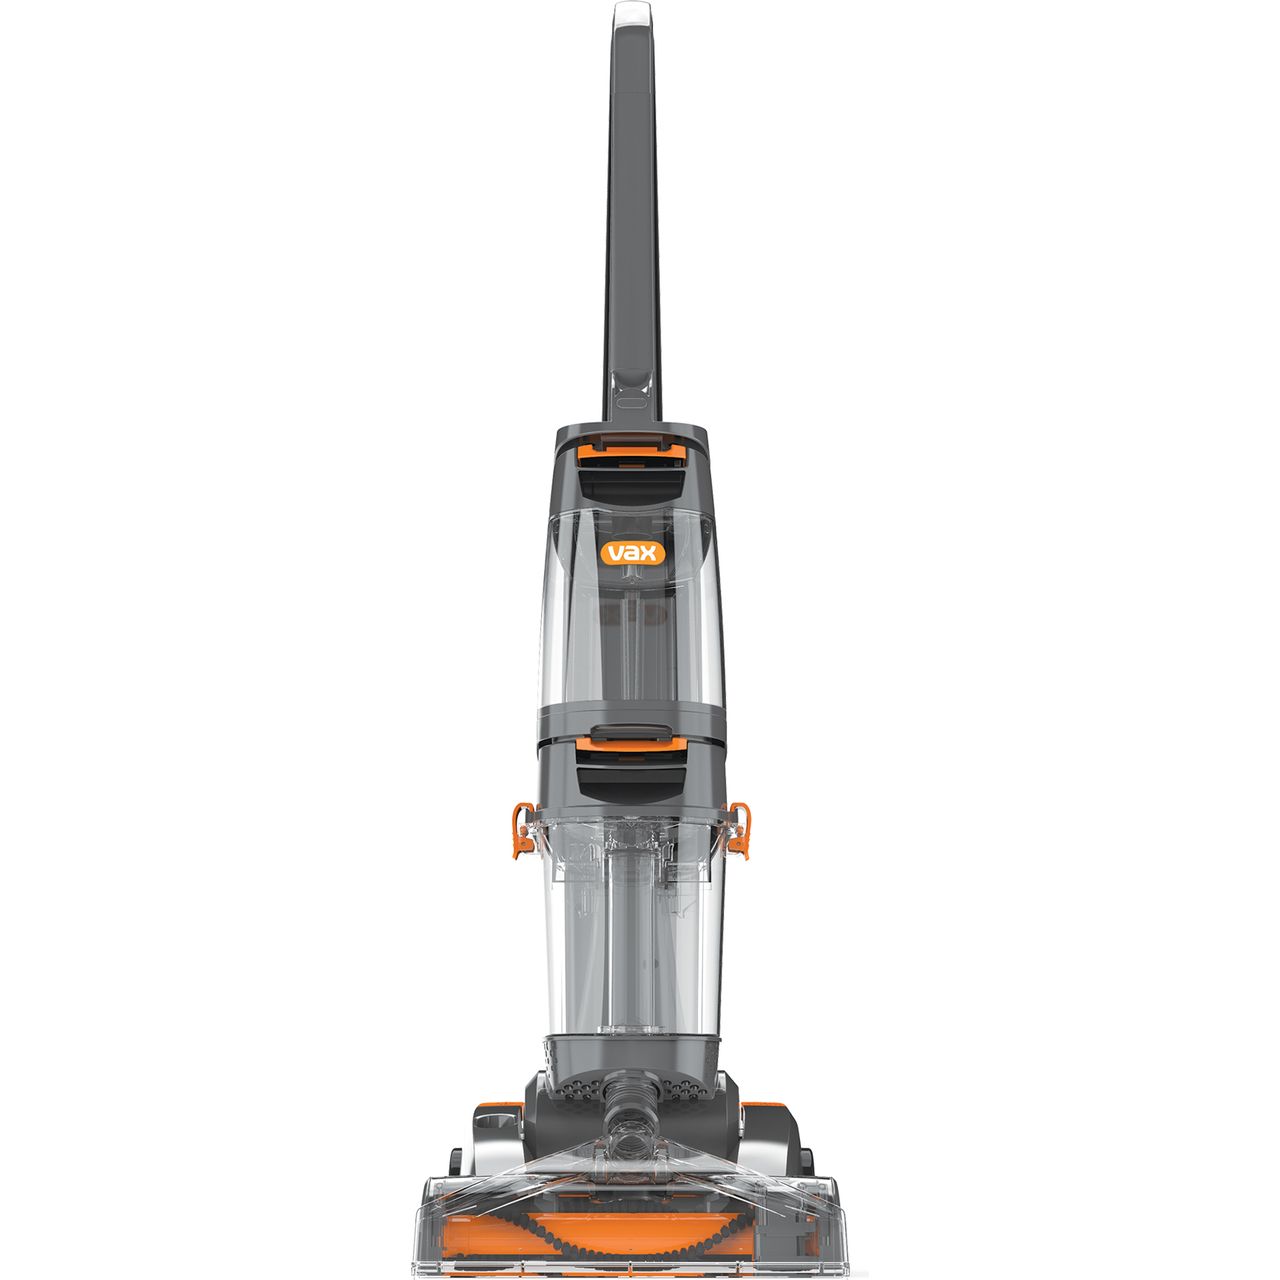 Vax Dual Power W85-DP-E Carpet Cleaner Review